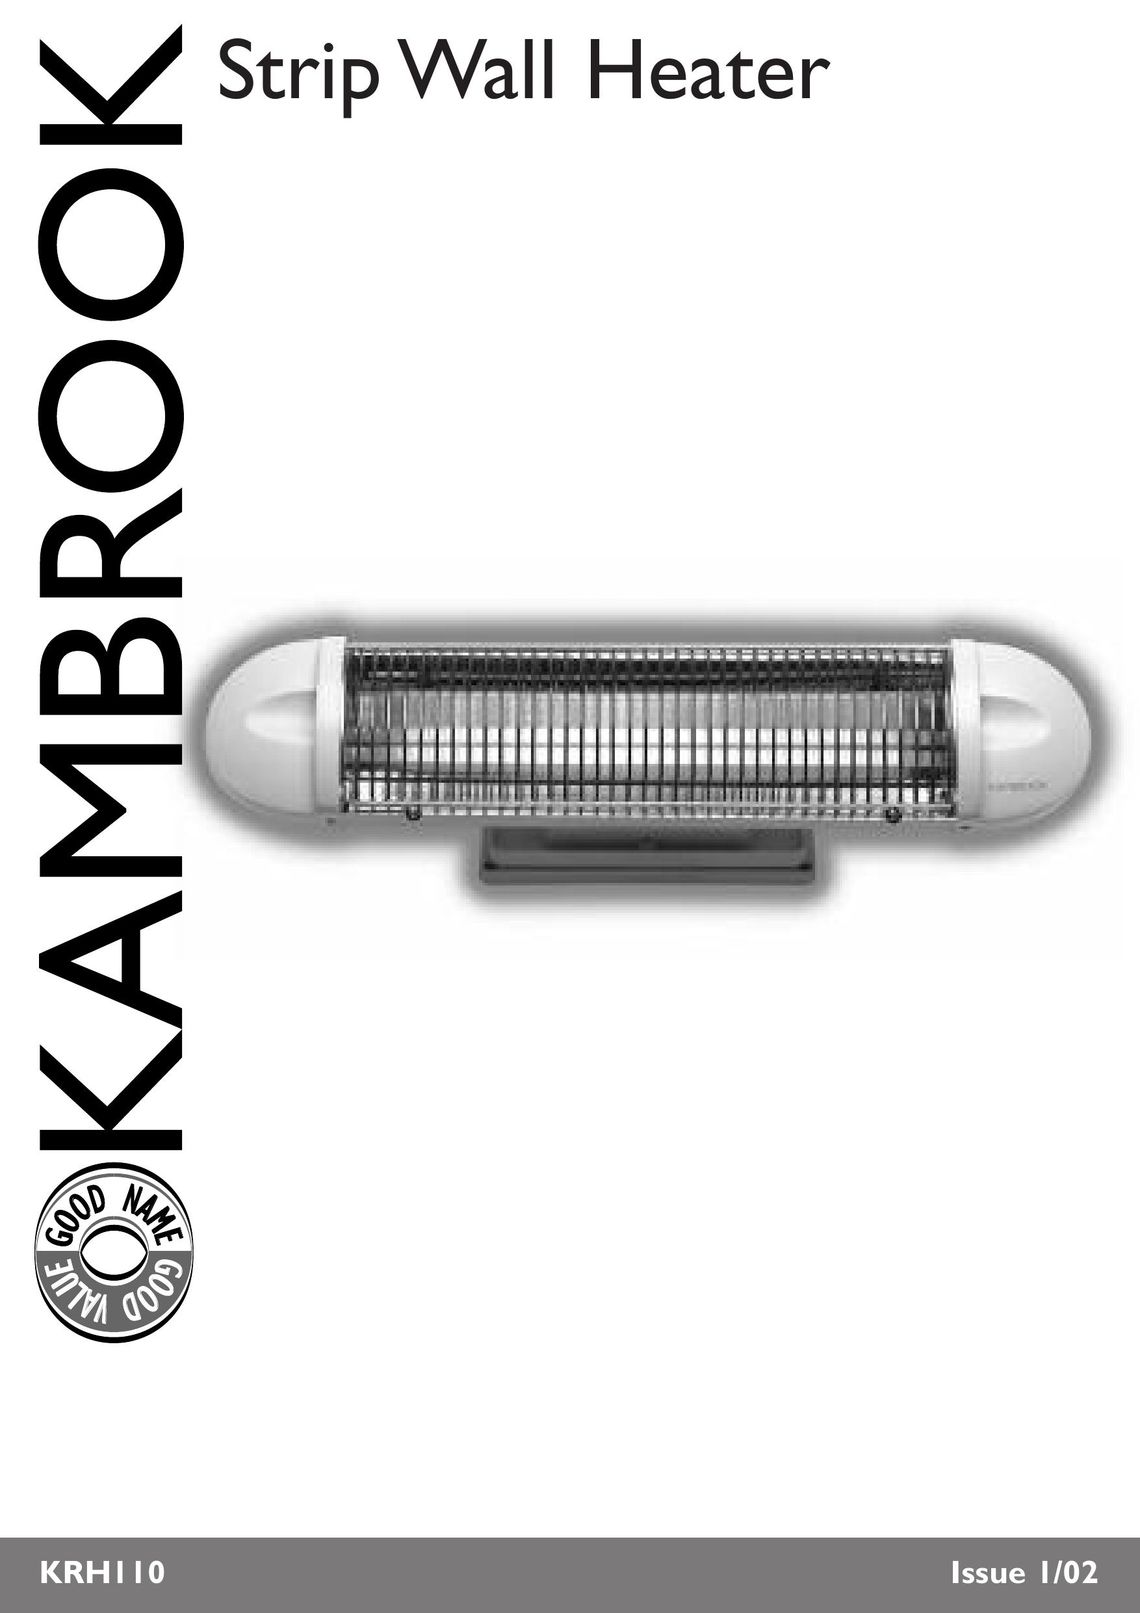 Kambrook KRH110 Air Conditioner User Manual